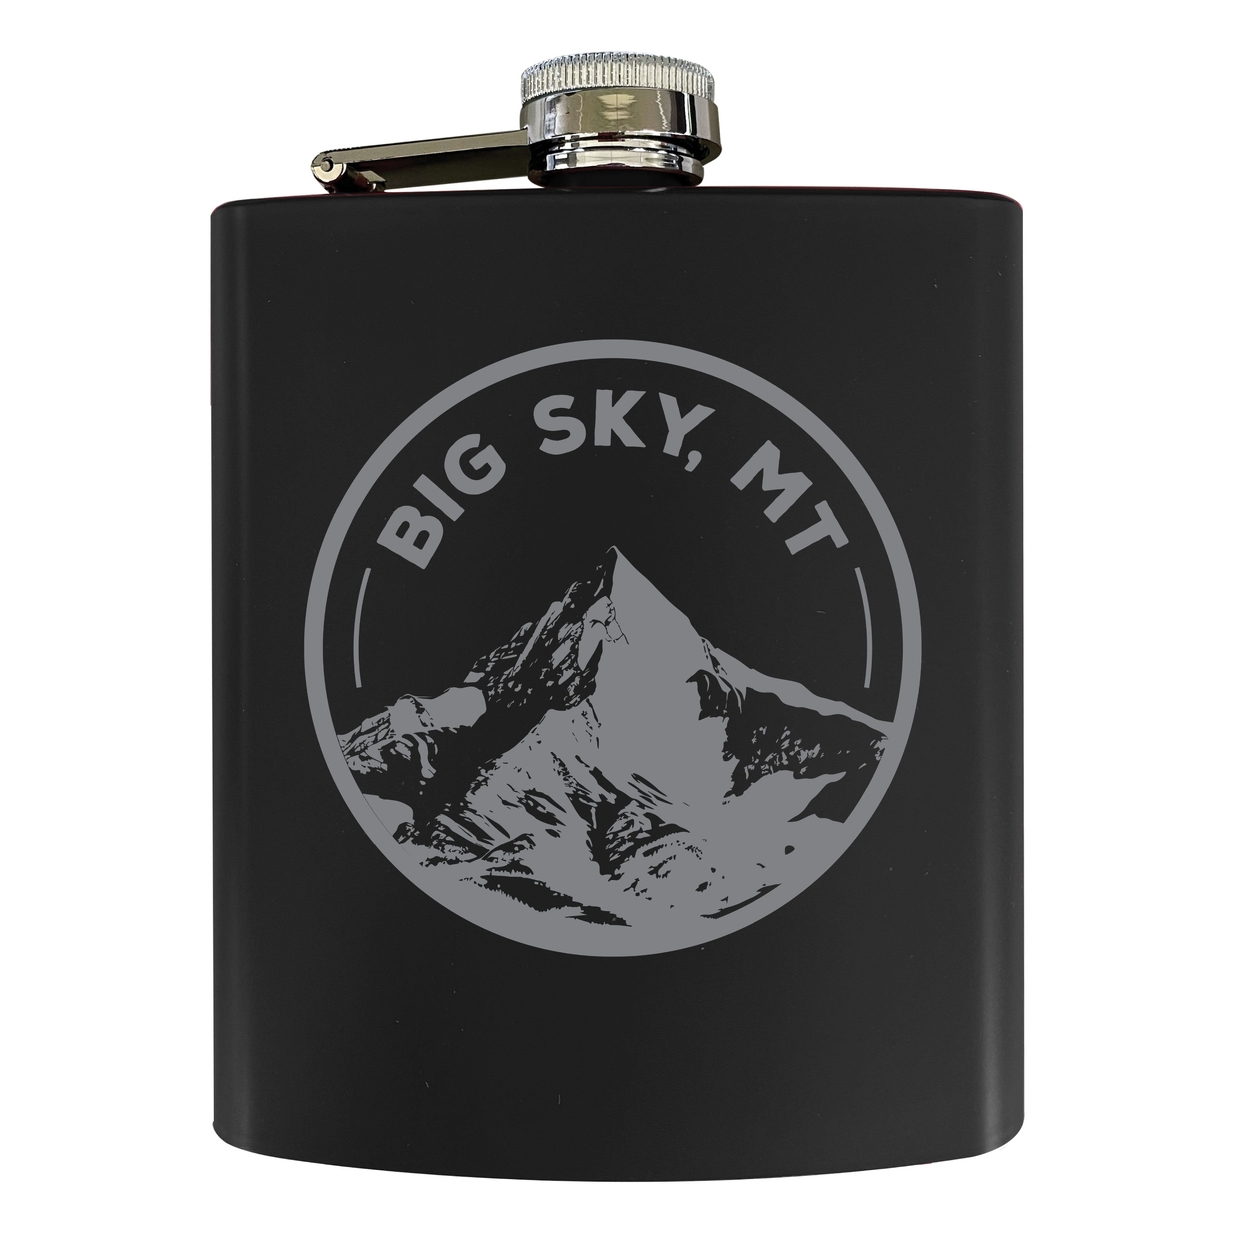 Big Sky Montana Souvenir 7 Oz Engraved Steel Flask Matte Finish - Black,,Single Unit